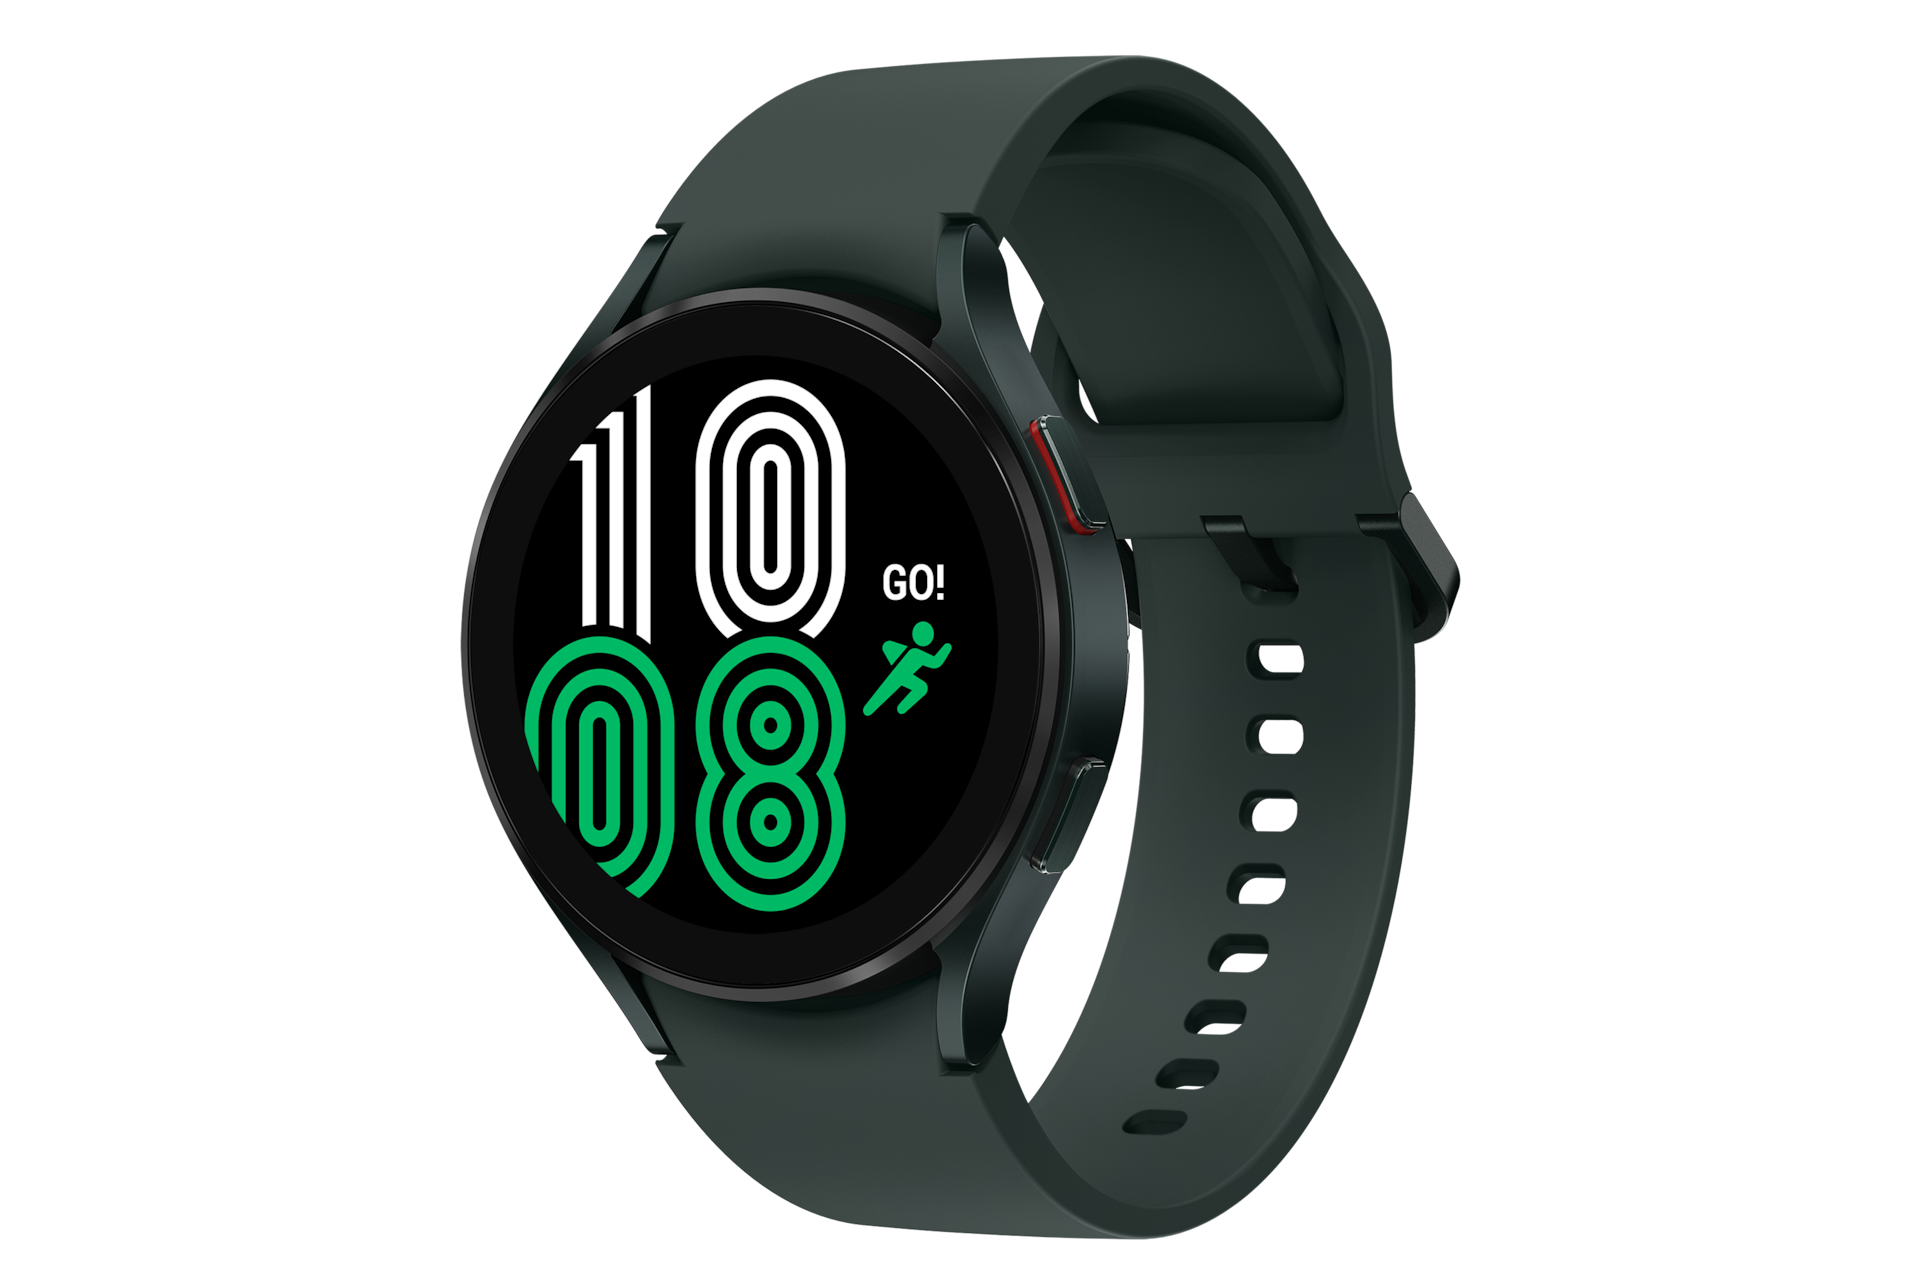 Tampilan depan Samsung Galaxy Watch 4 smartwatch warna Hijau. Cek Harga dan spesifikasi. Harga smartwatch Samsung terbaru 2021.